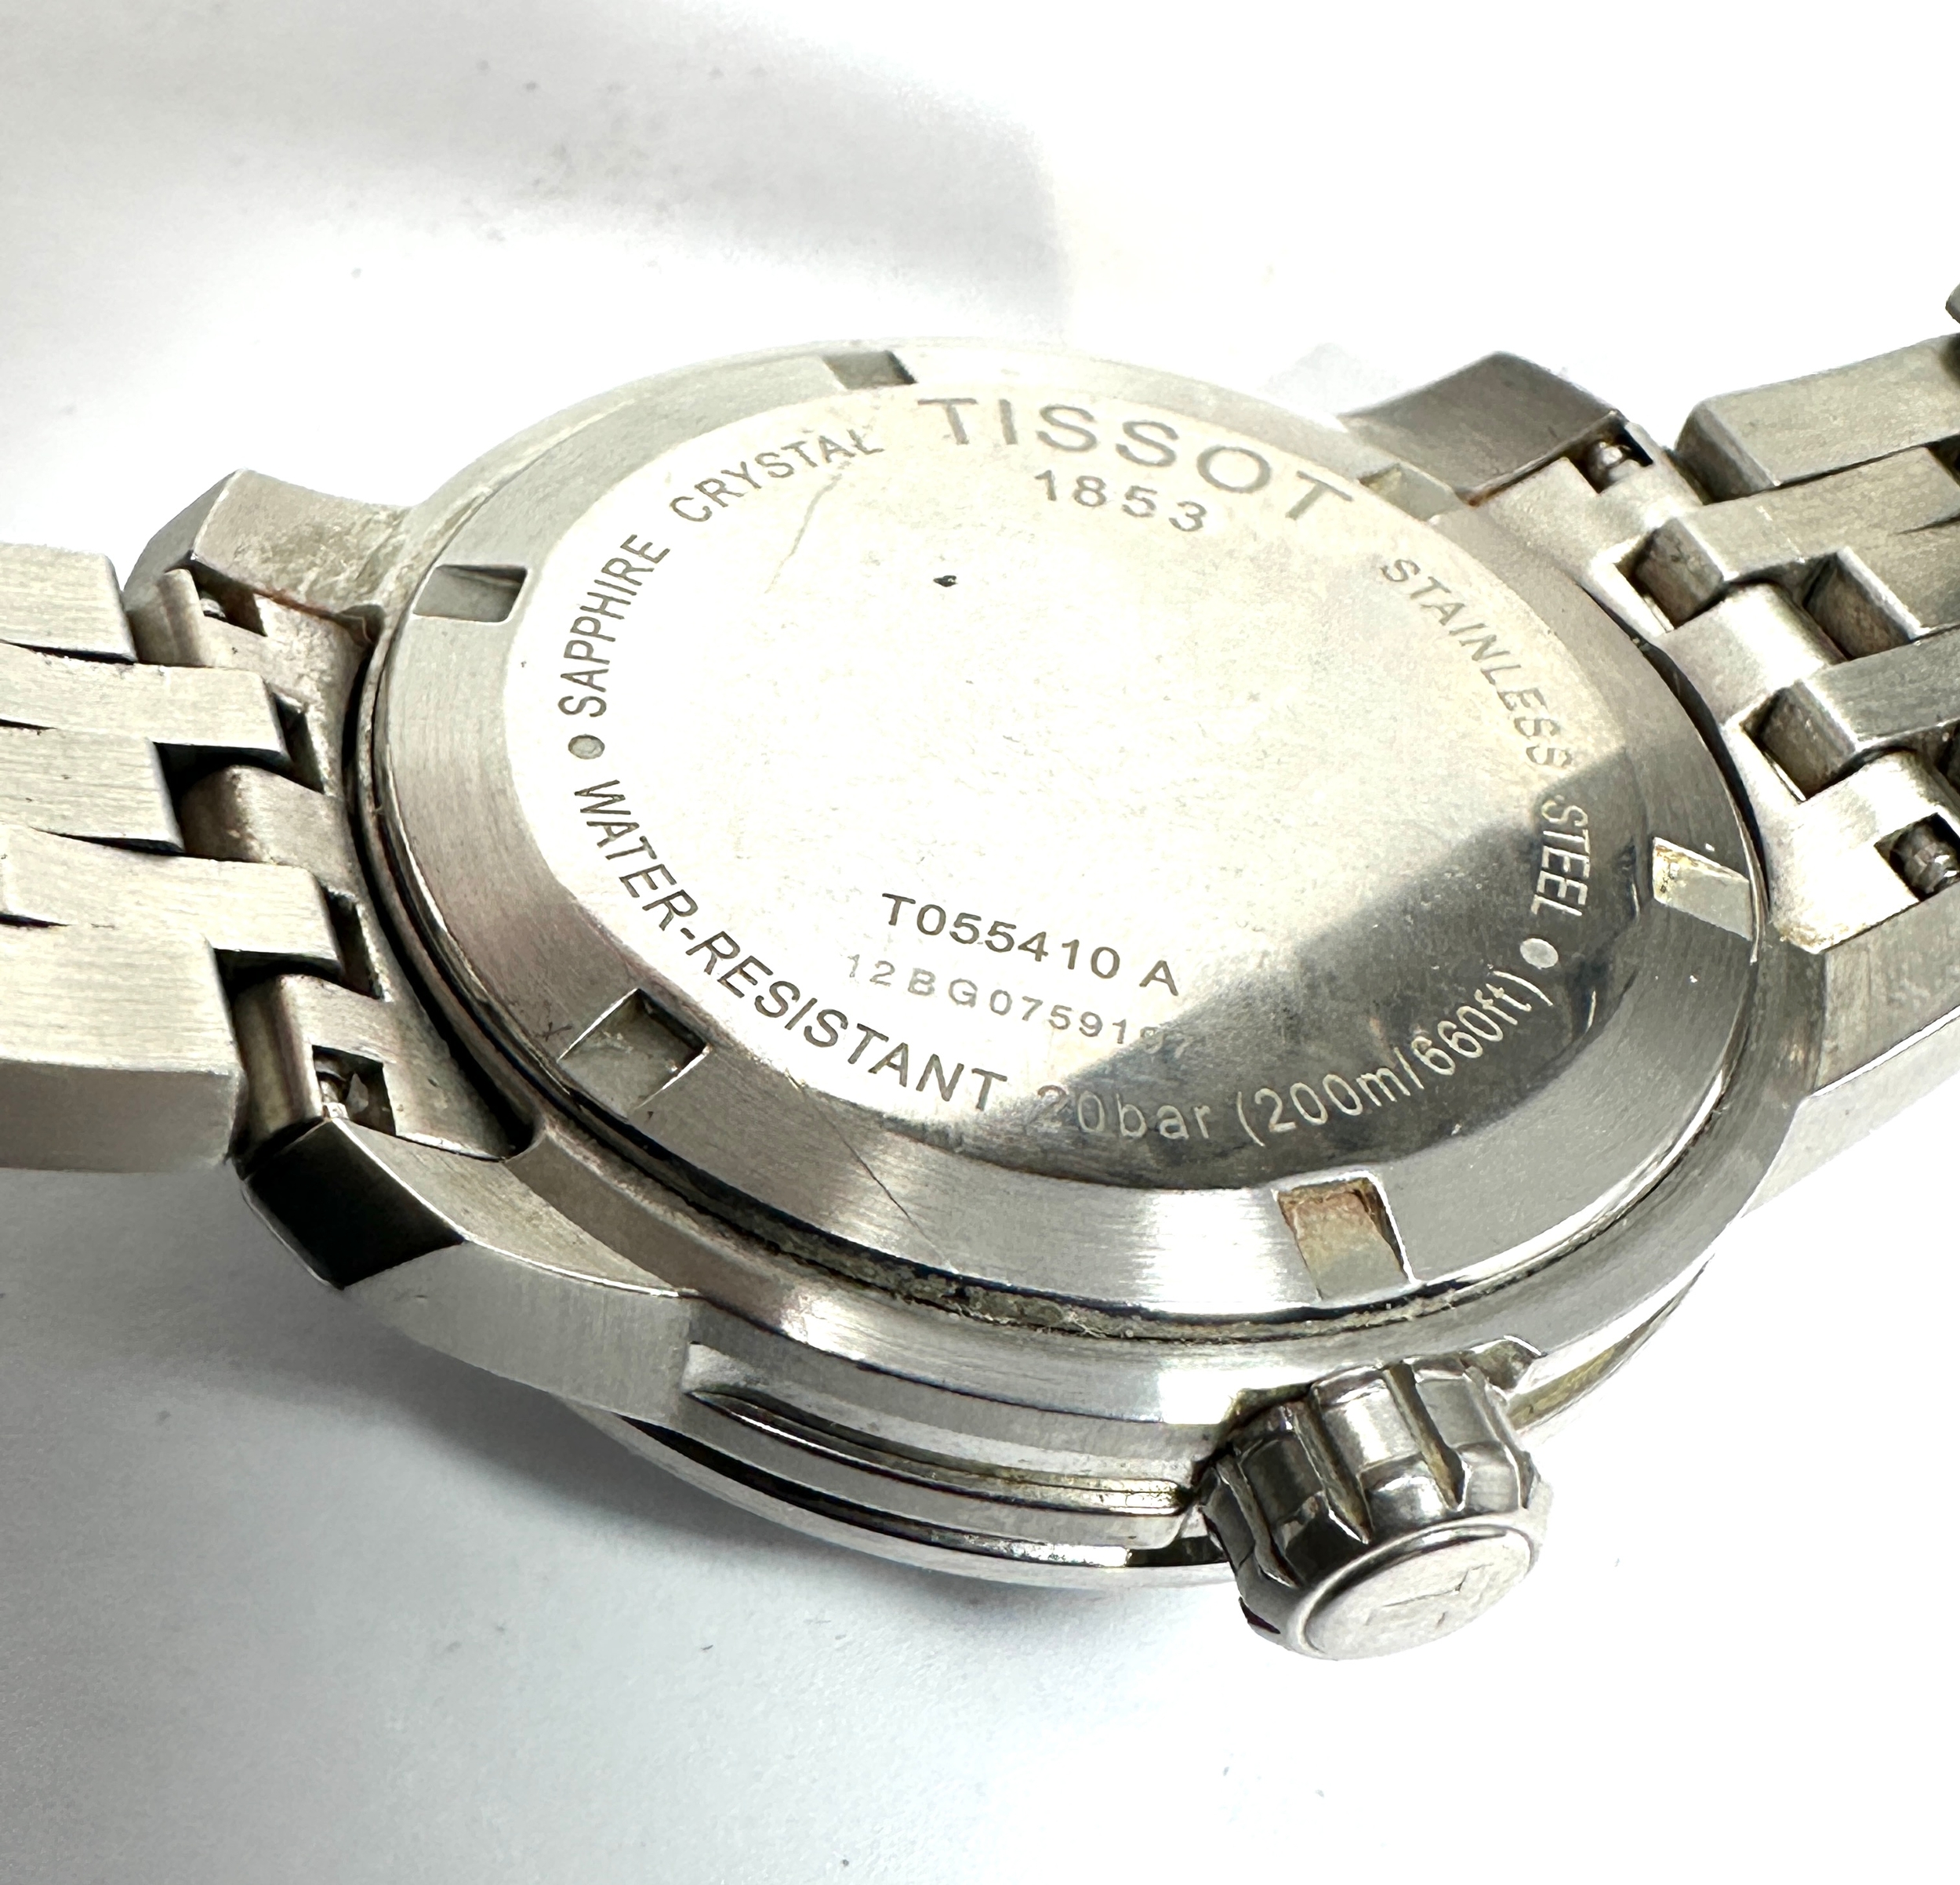 Gents Tissot 1853 quartz to55410a the watch does tick - Bild 5 aus 5